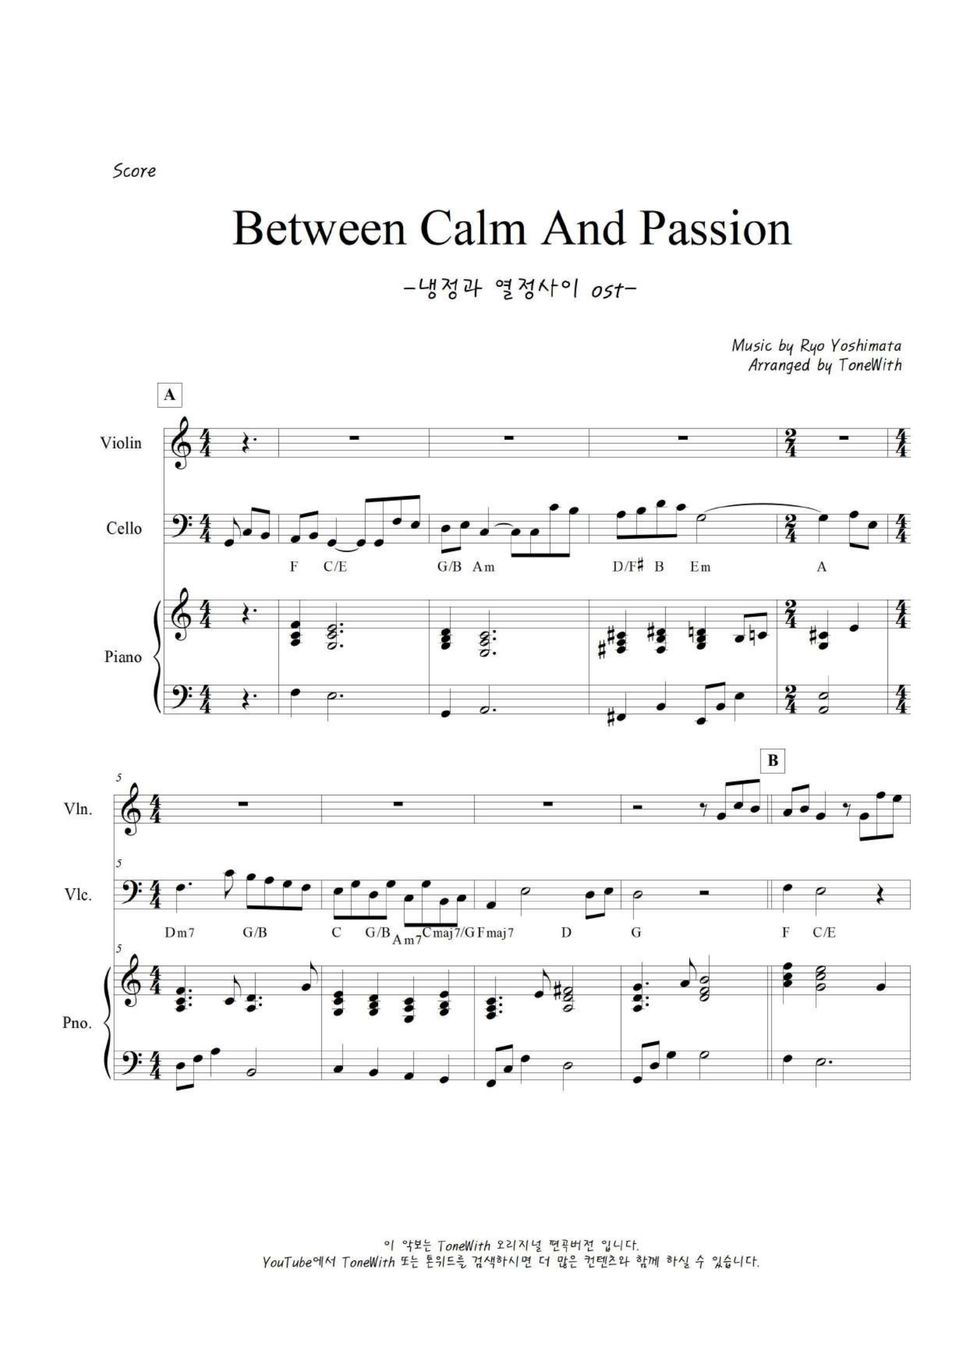 Ryo Yoshimata - 냉정과 열정사이 ost | Between Calm And Passion (피아노/바이올린/첼로) by ToneWith 톤위드